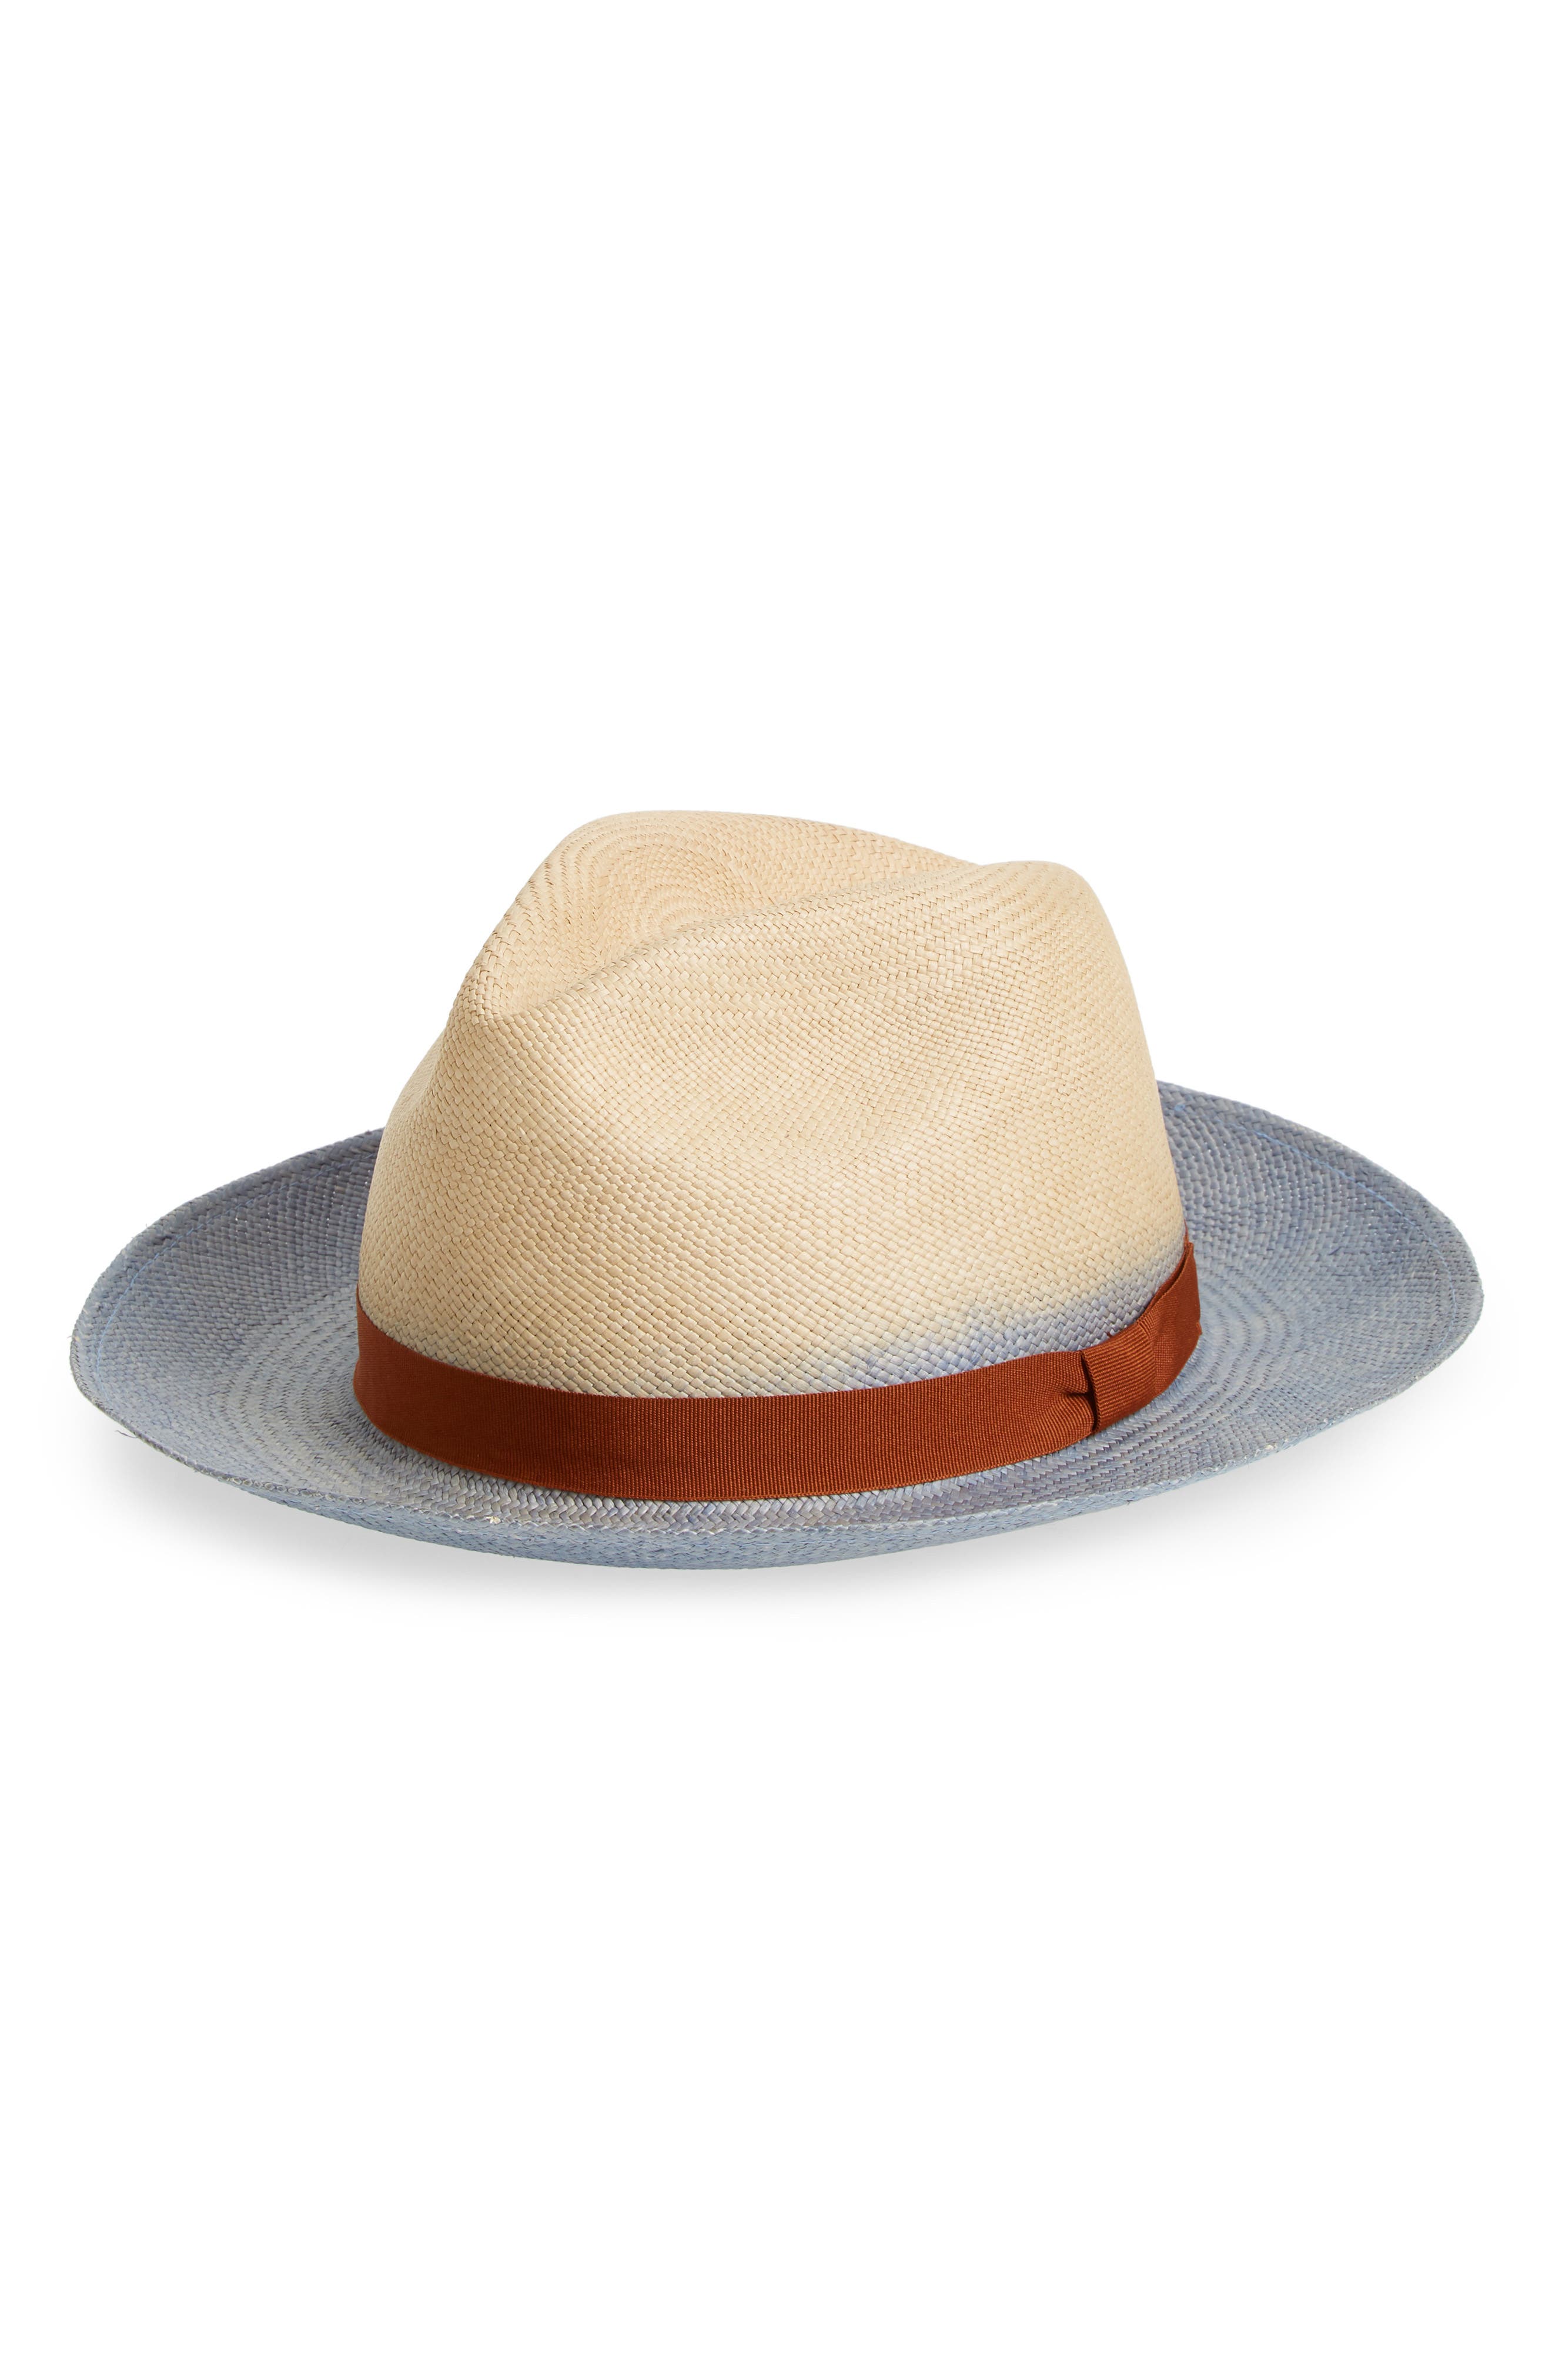 Frye Feline Panama Fedora Hat In Indigo